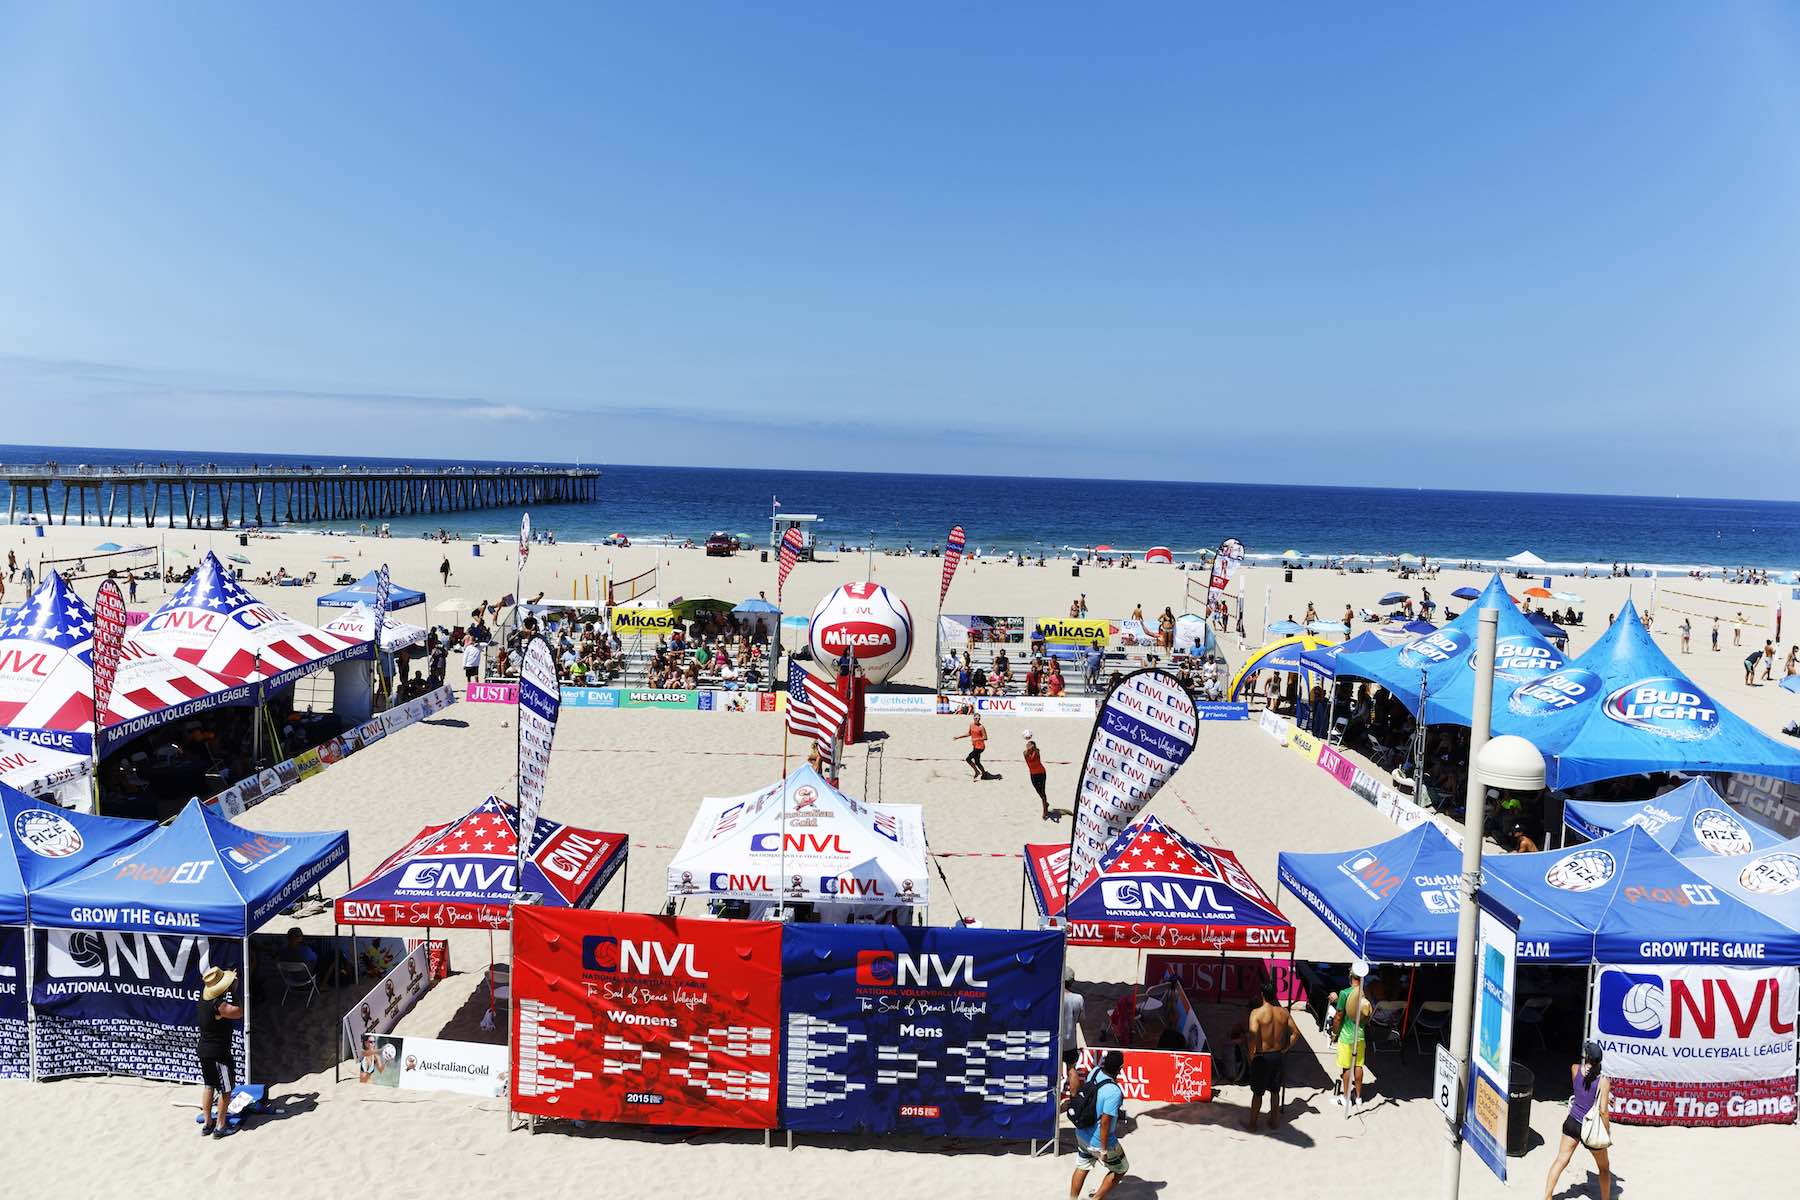 National Volleyball League Announces 2016 Pro Tour Schedule And Nvl Rize Junior Tour Events